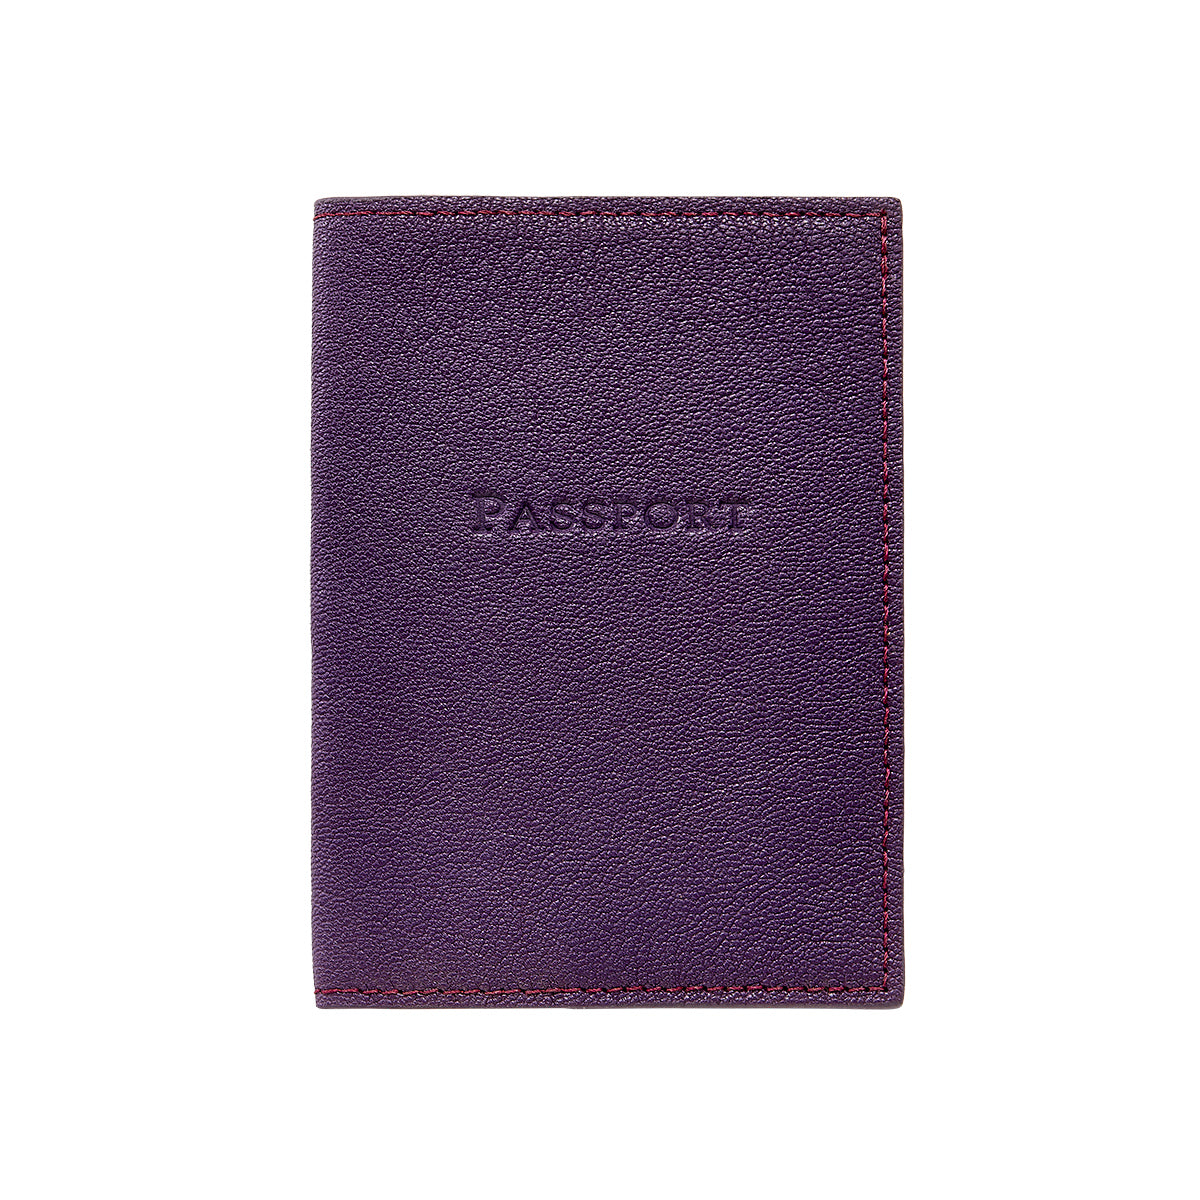 Graphic Image Passport Holder Purple Goatskin Leather